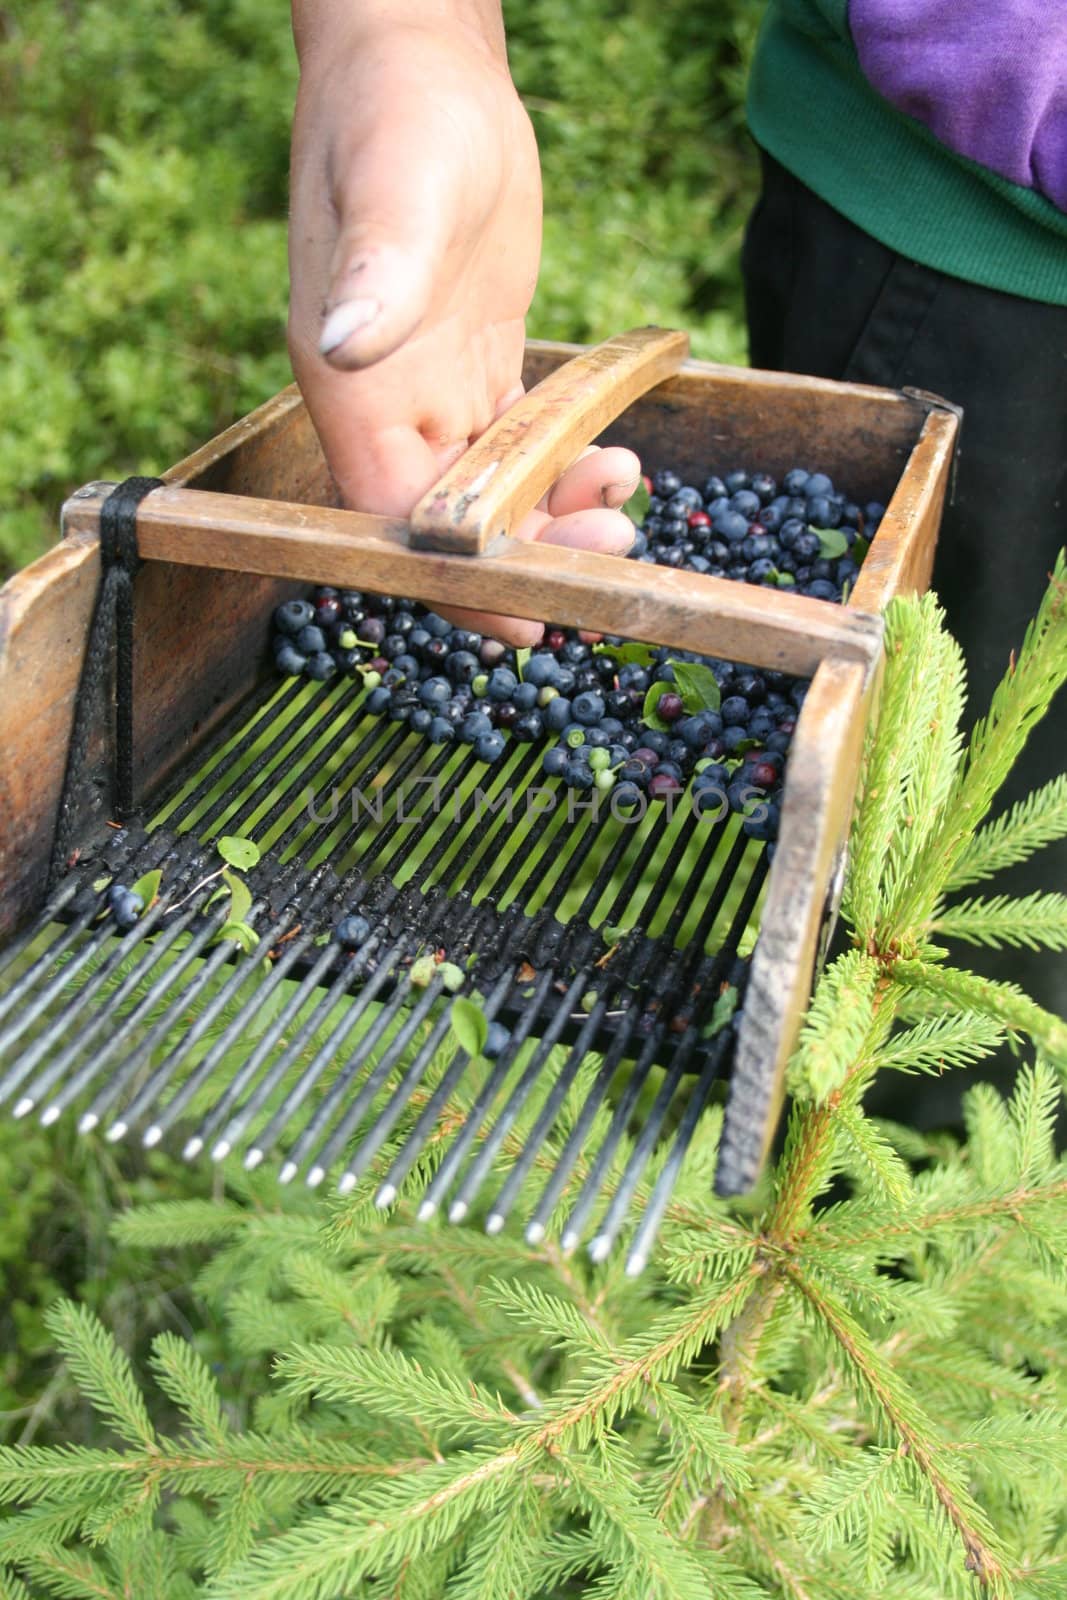 Gypsies picking blueberries in the Transylvanian mountains